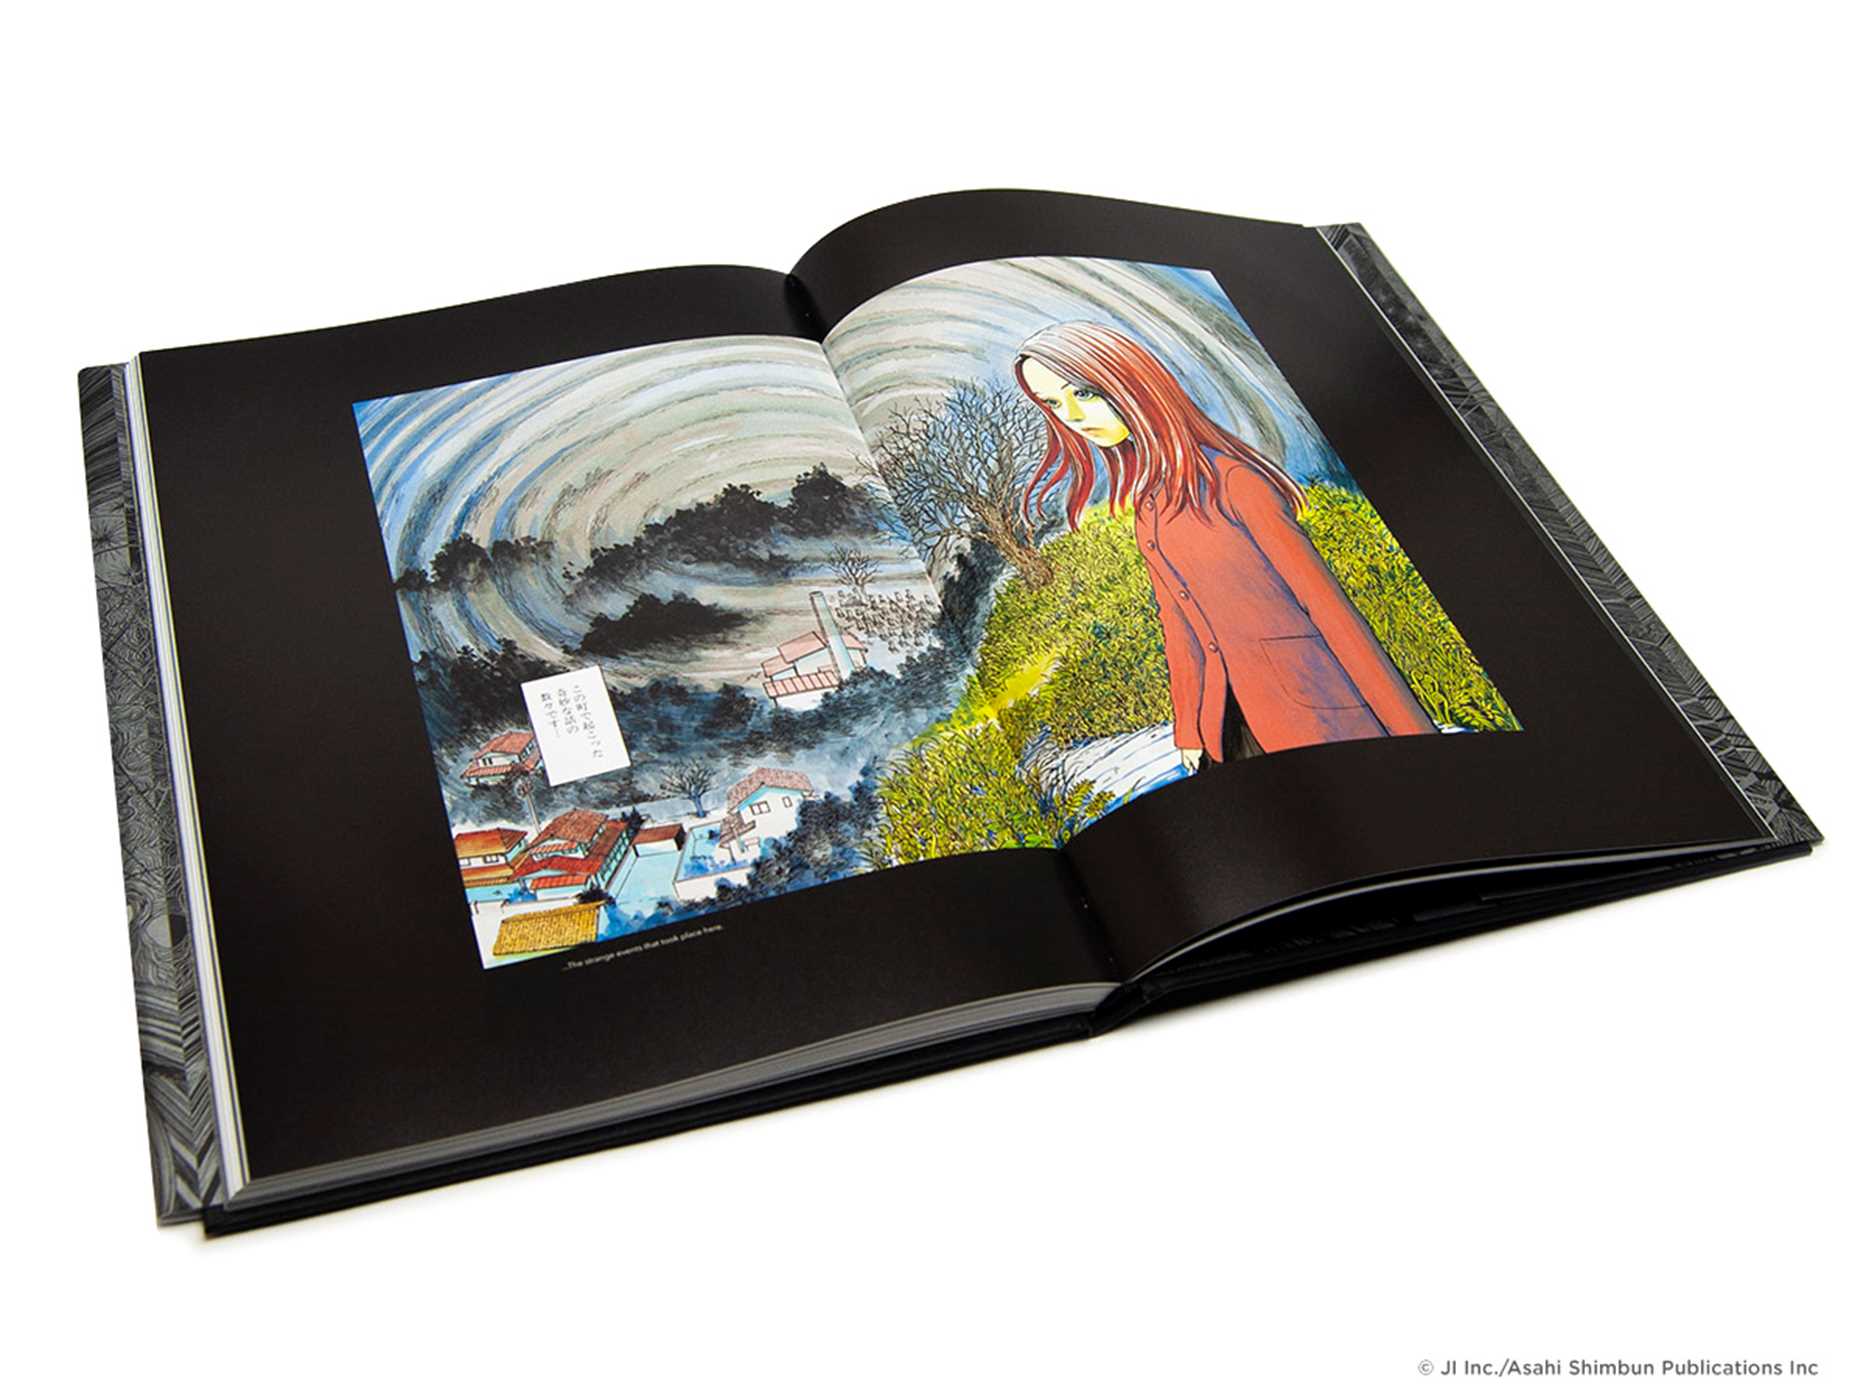 Art Book: Twisted Visions: The Art of Junji Ito